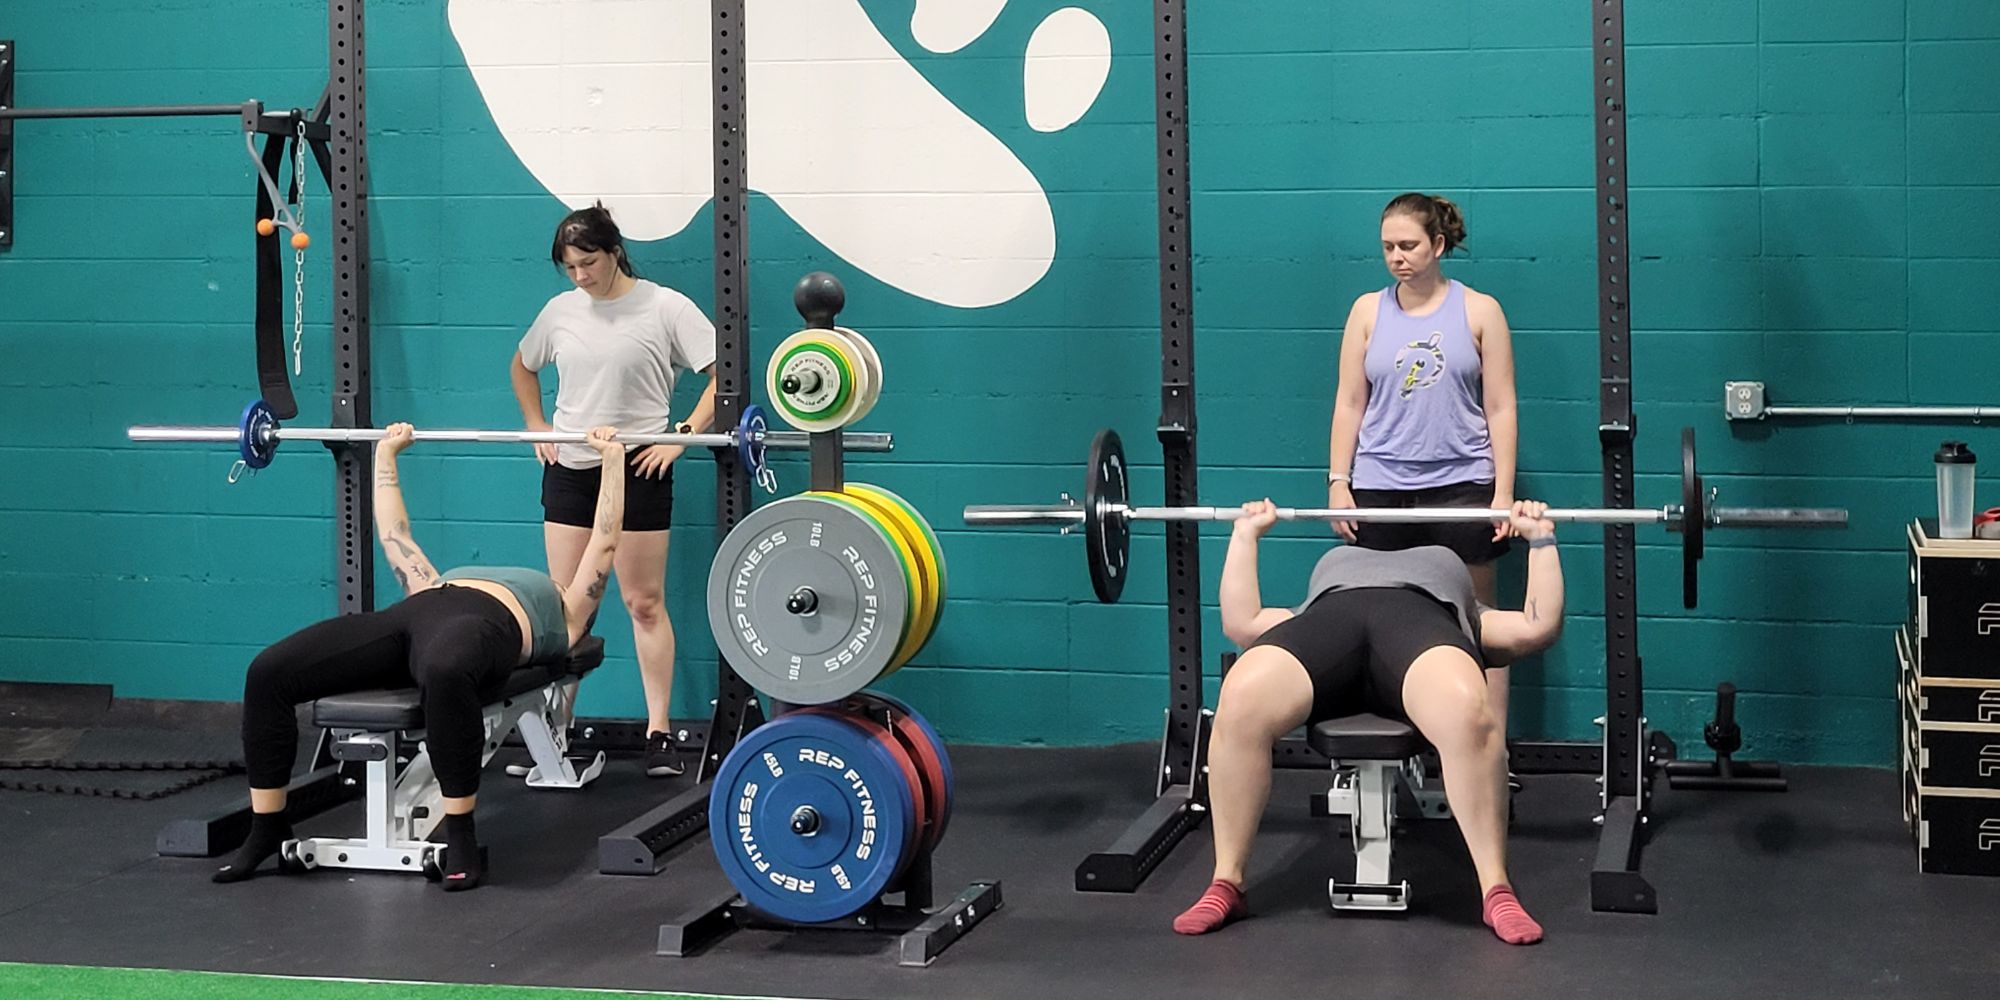 women at Bjorn Fitness lifting